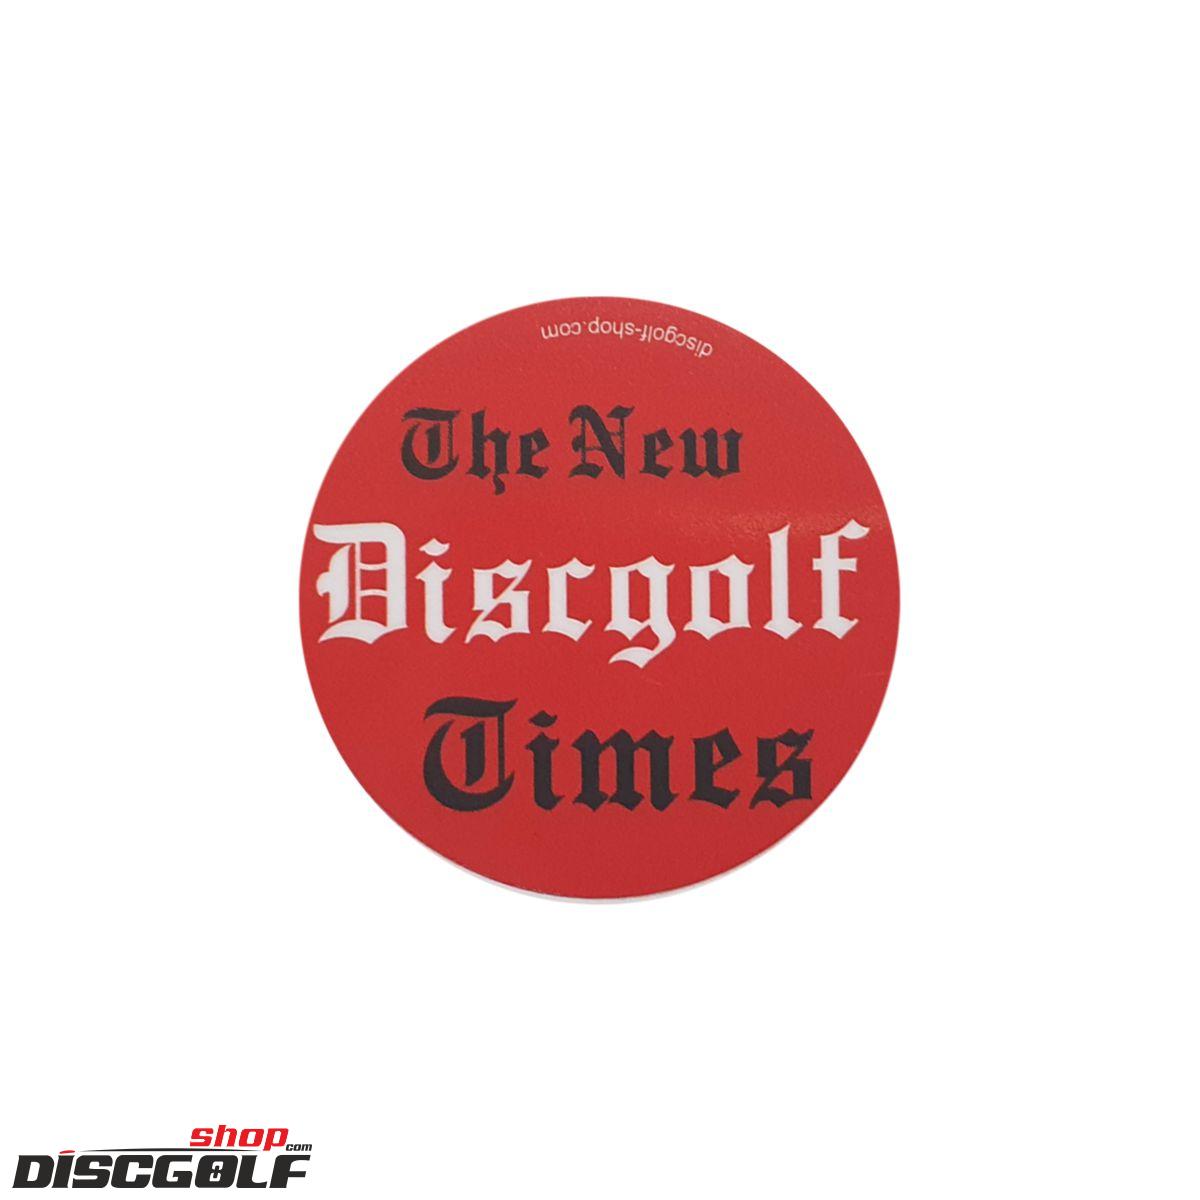 Samolepka "The New Discgolf Times"